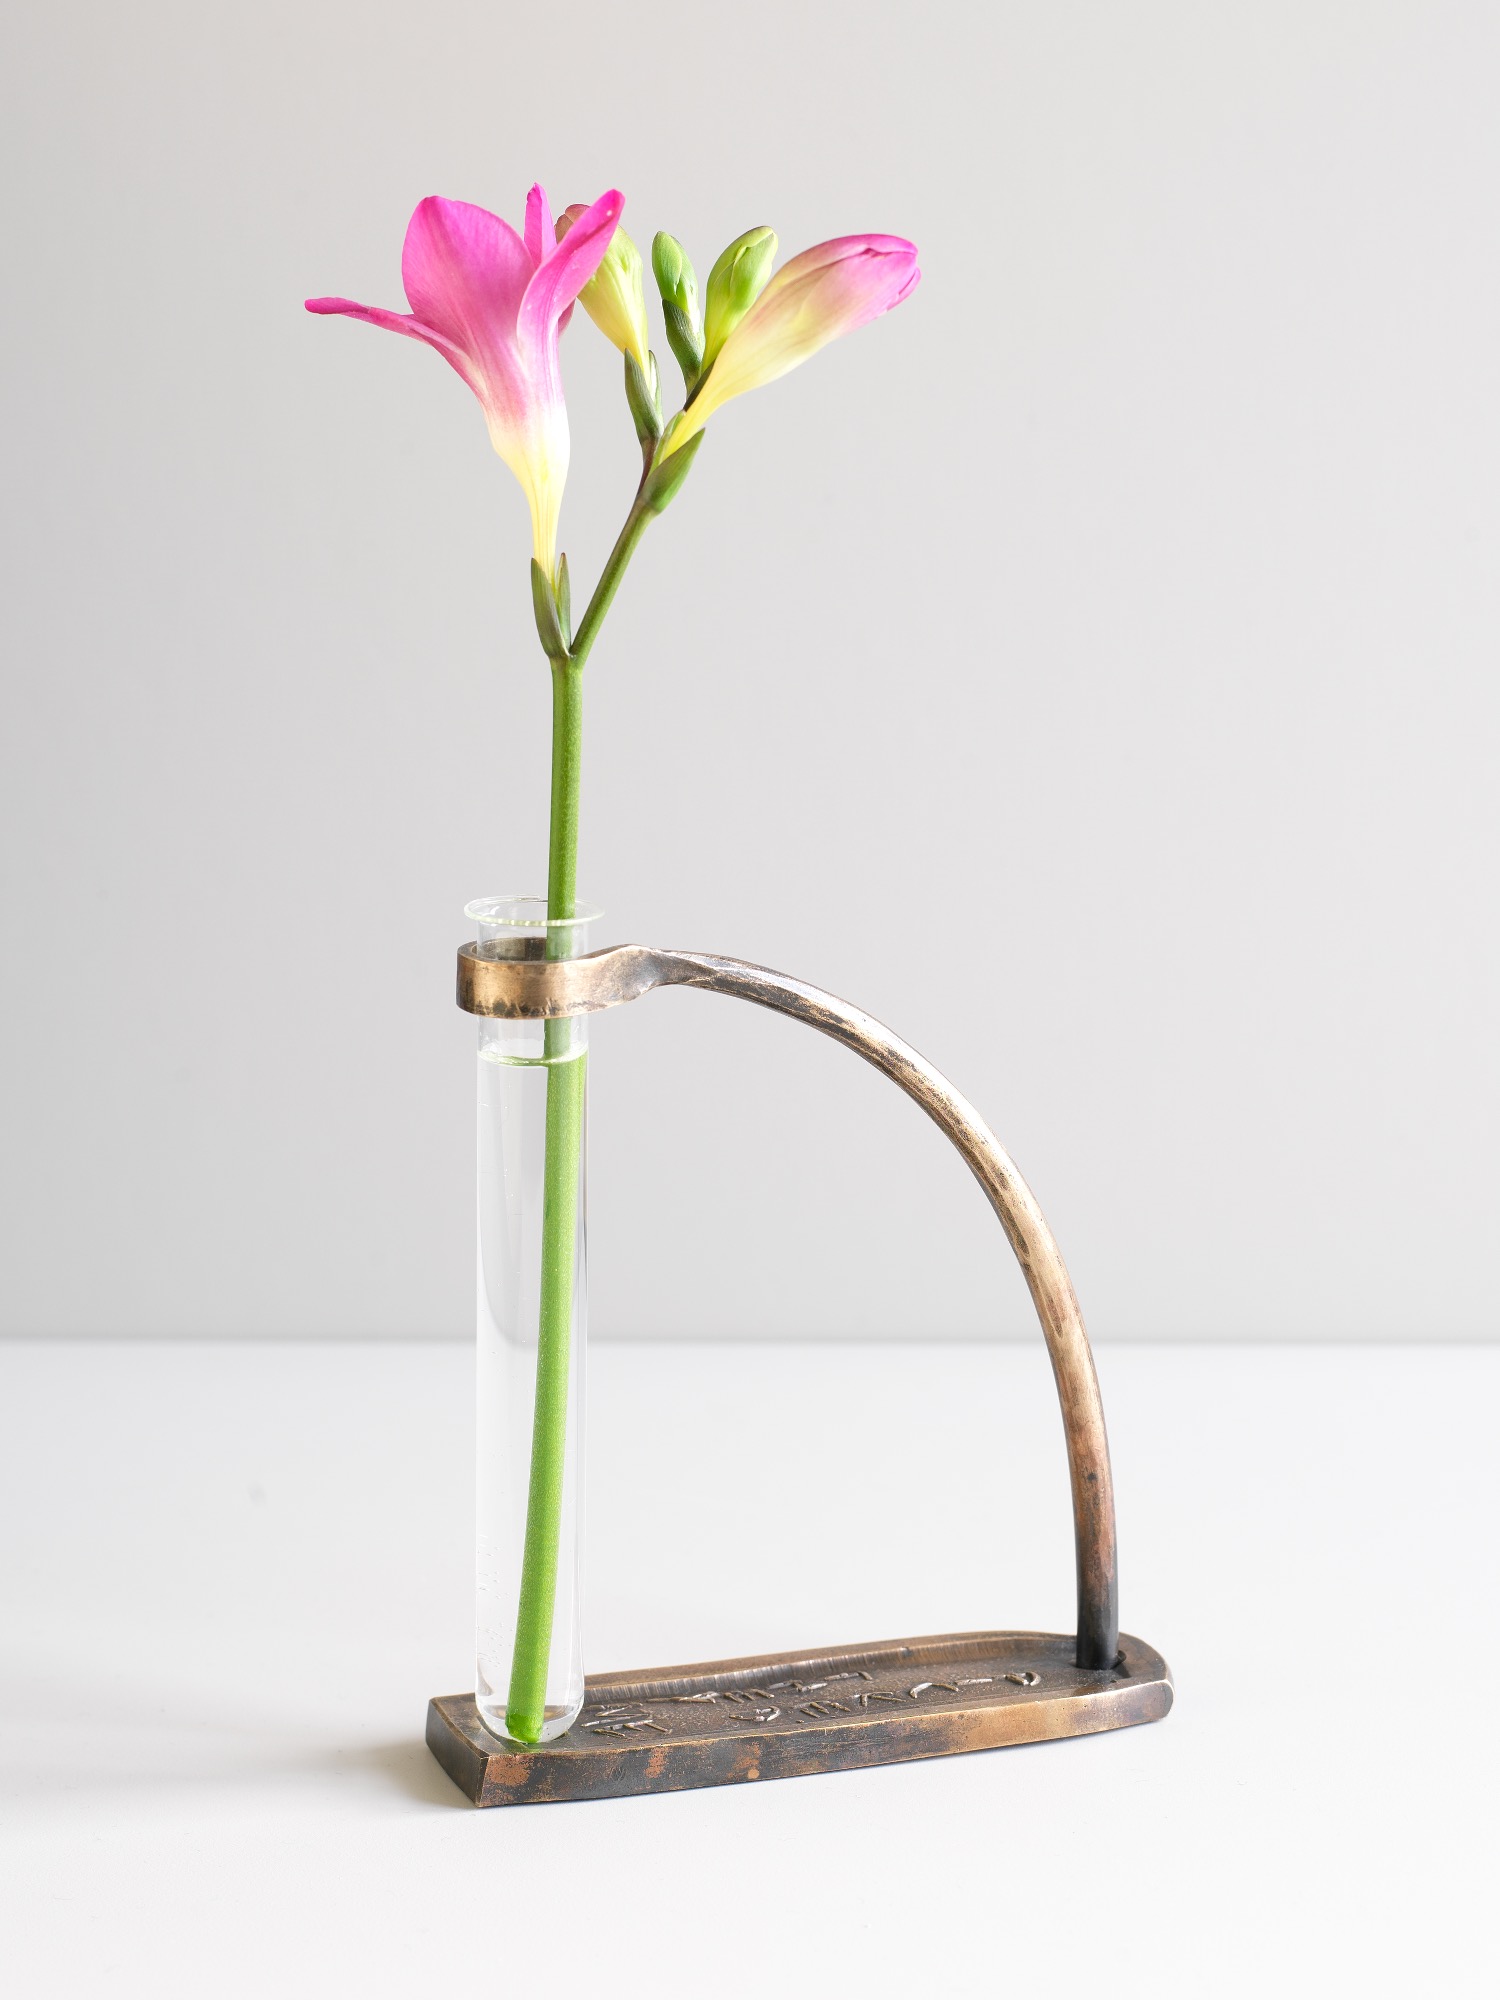 They Picked Me, bronze single stem vase by Michael Calnan 2. Photo Richard Johnston.